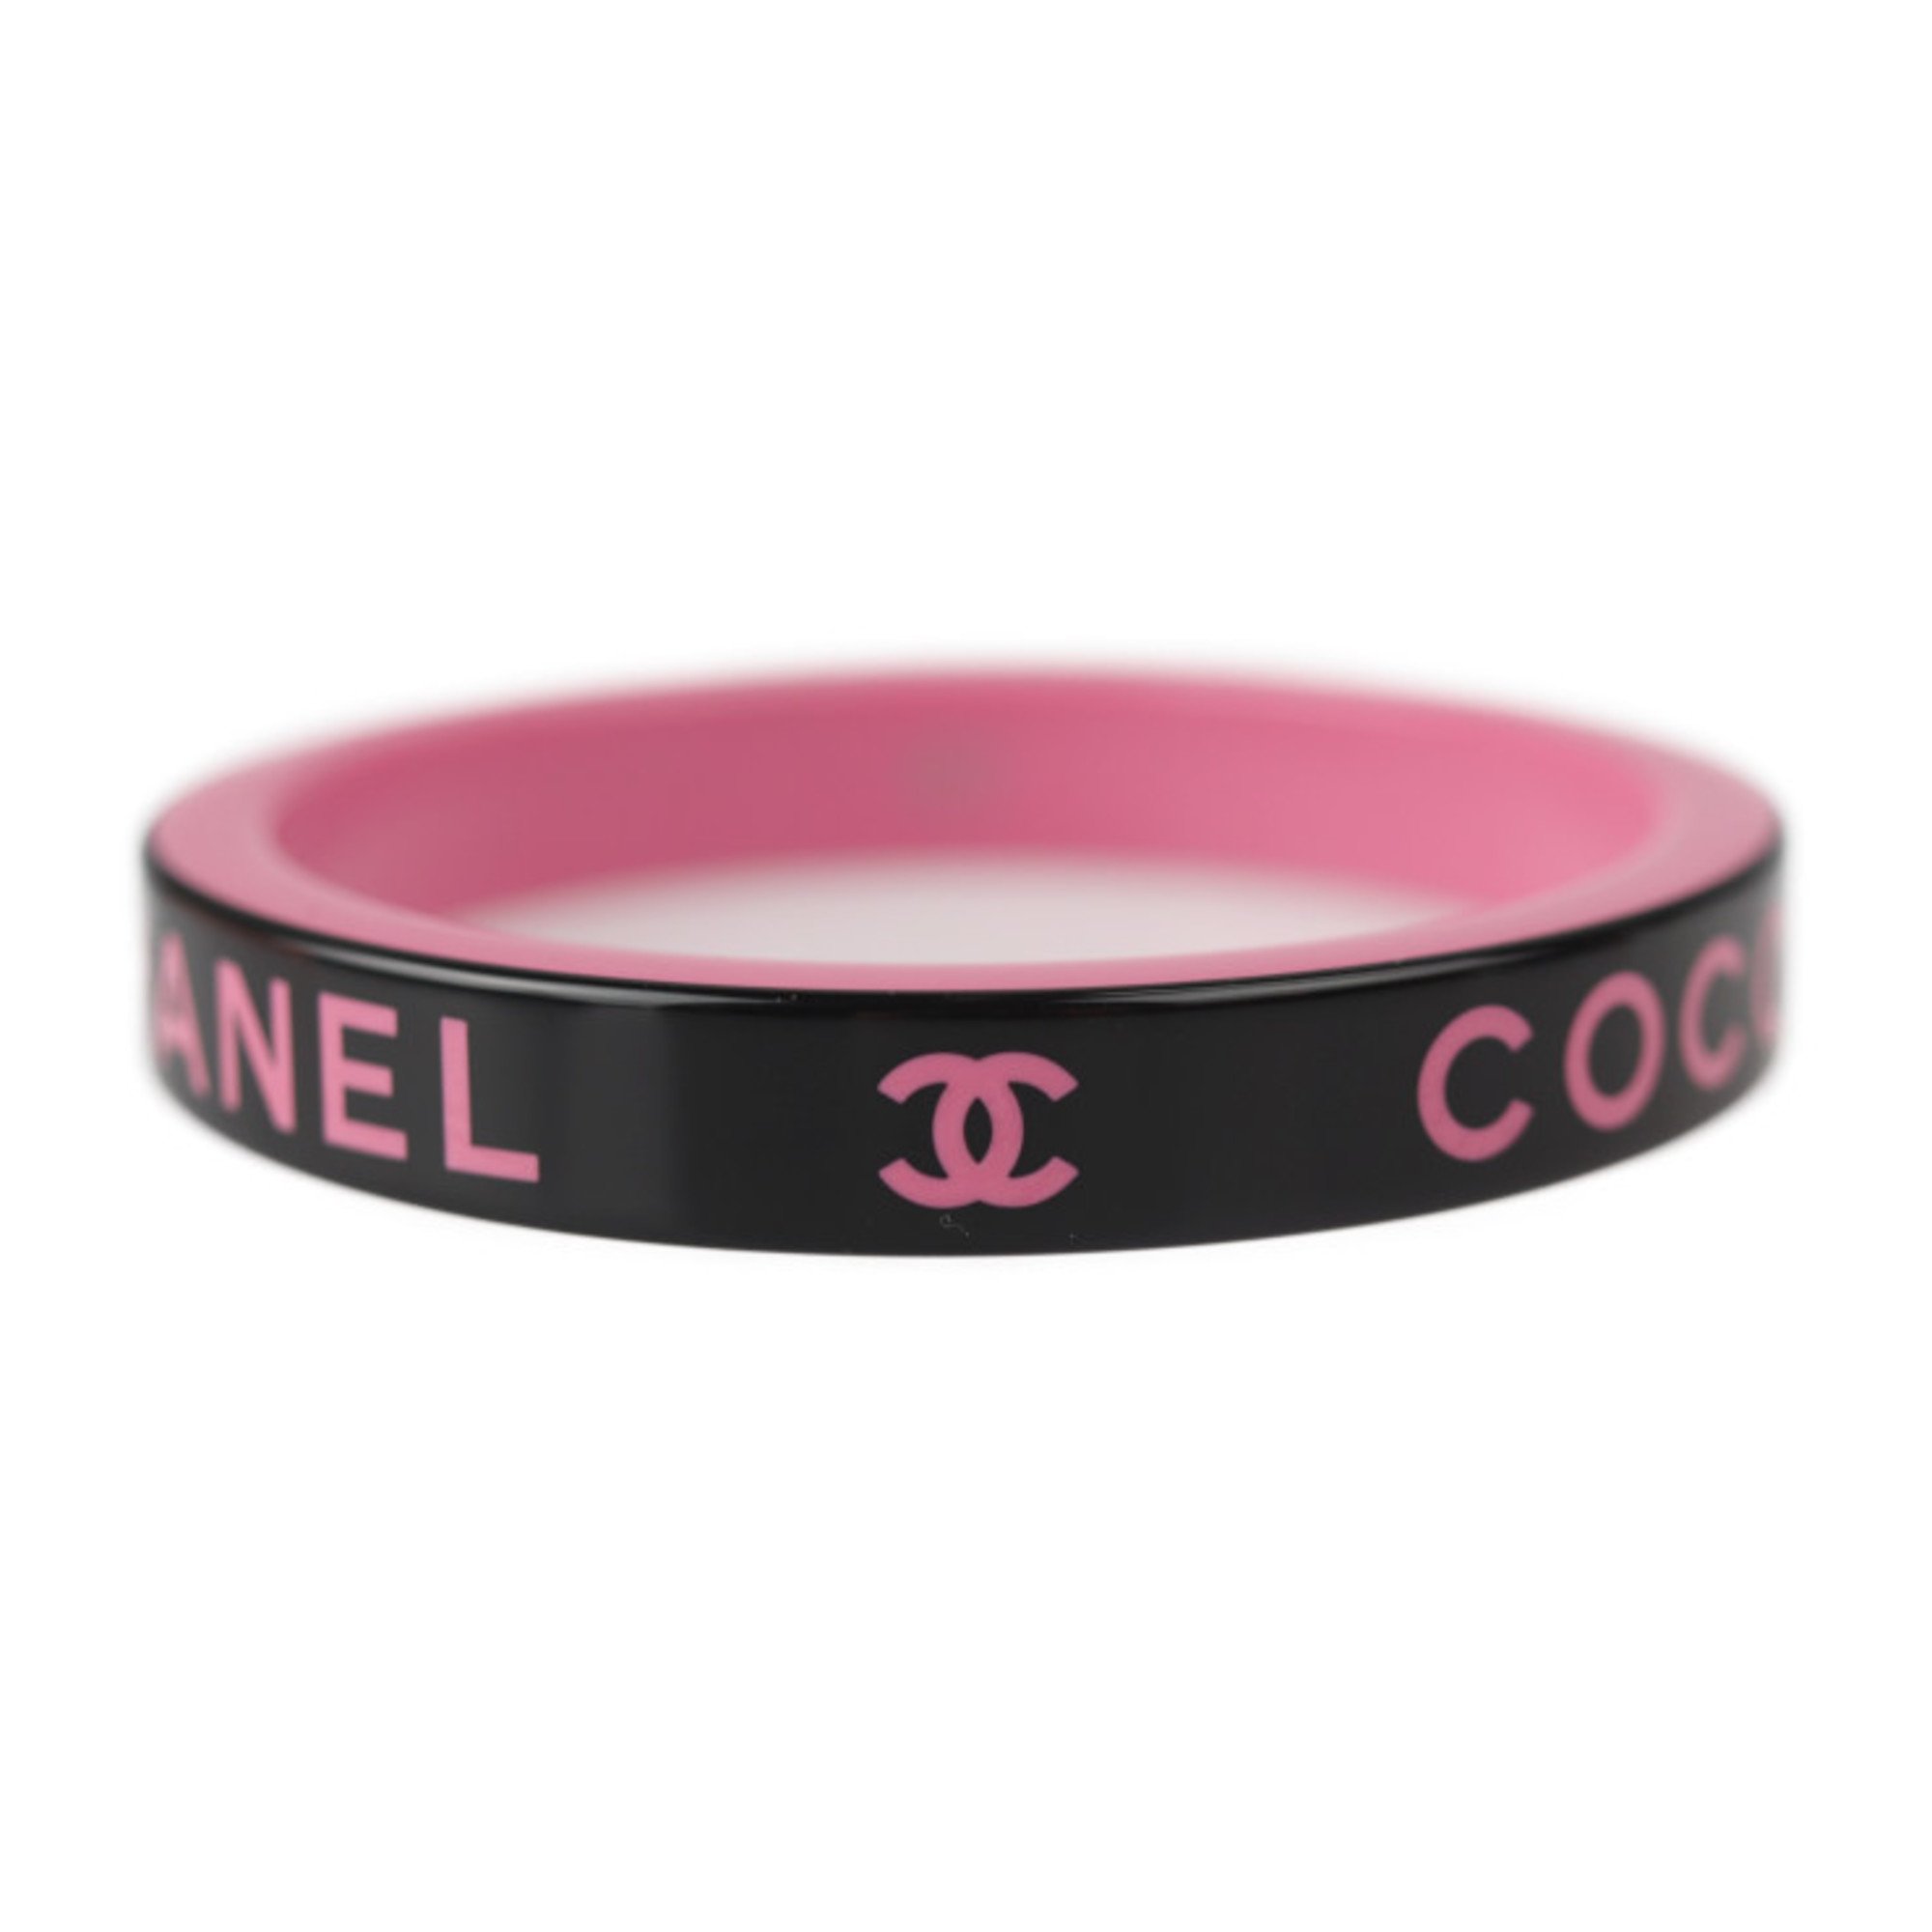 CHANEL Chanel bangle AB8421 resin black pink logo CC mark B22S